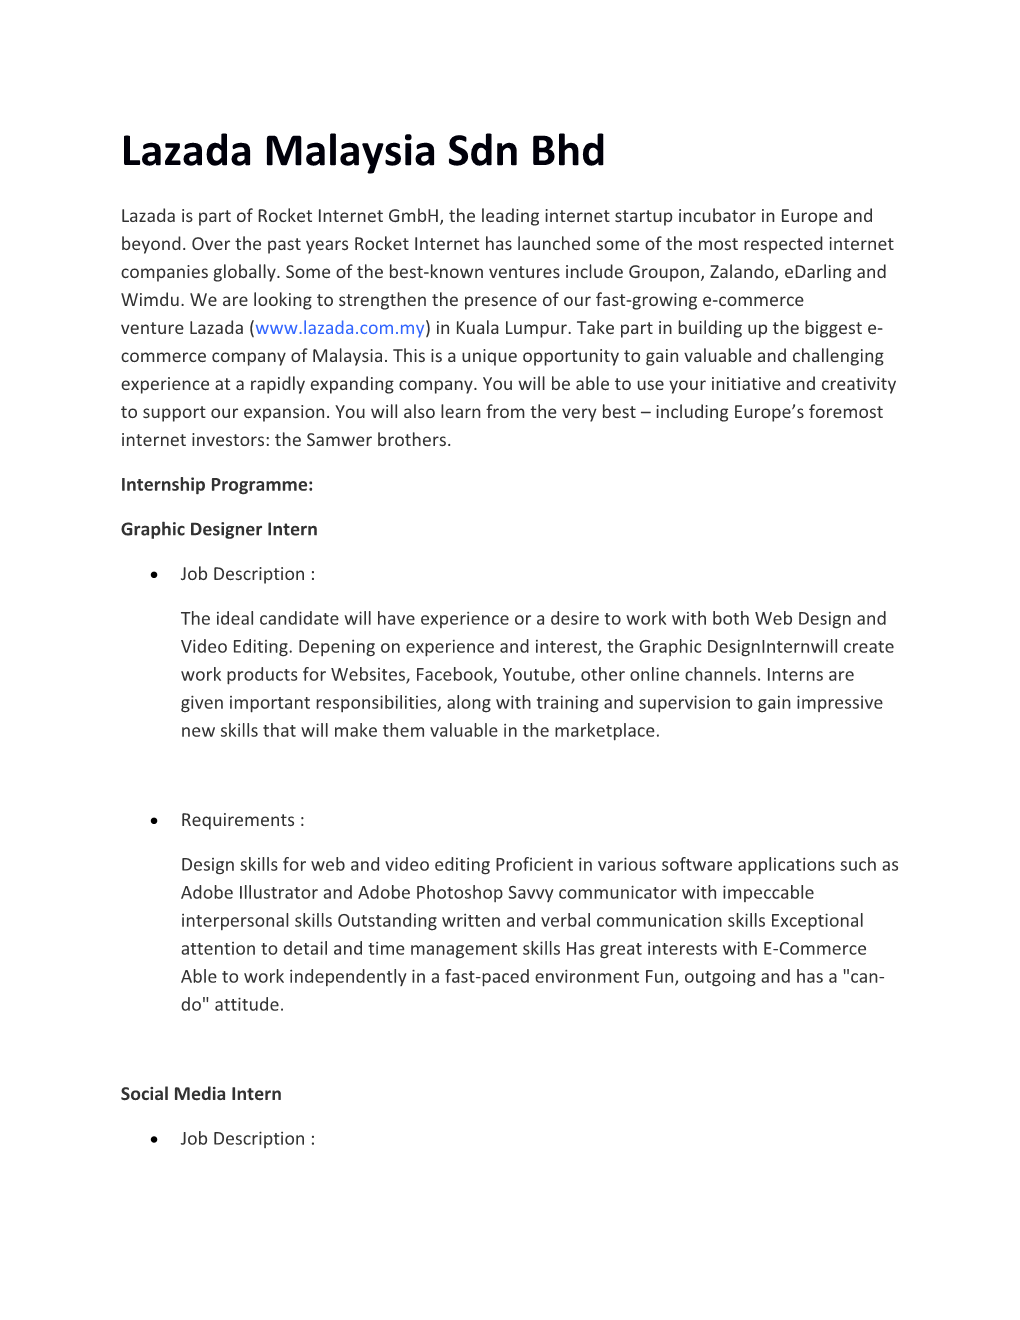 Lazada Malaysia Sdnbhd